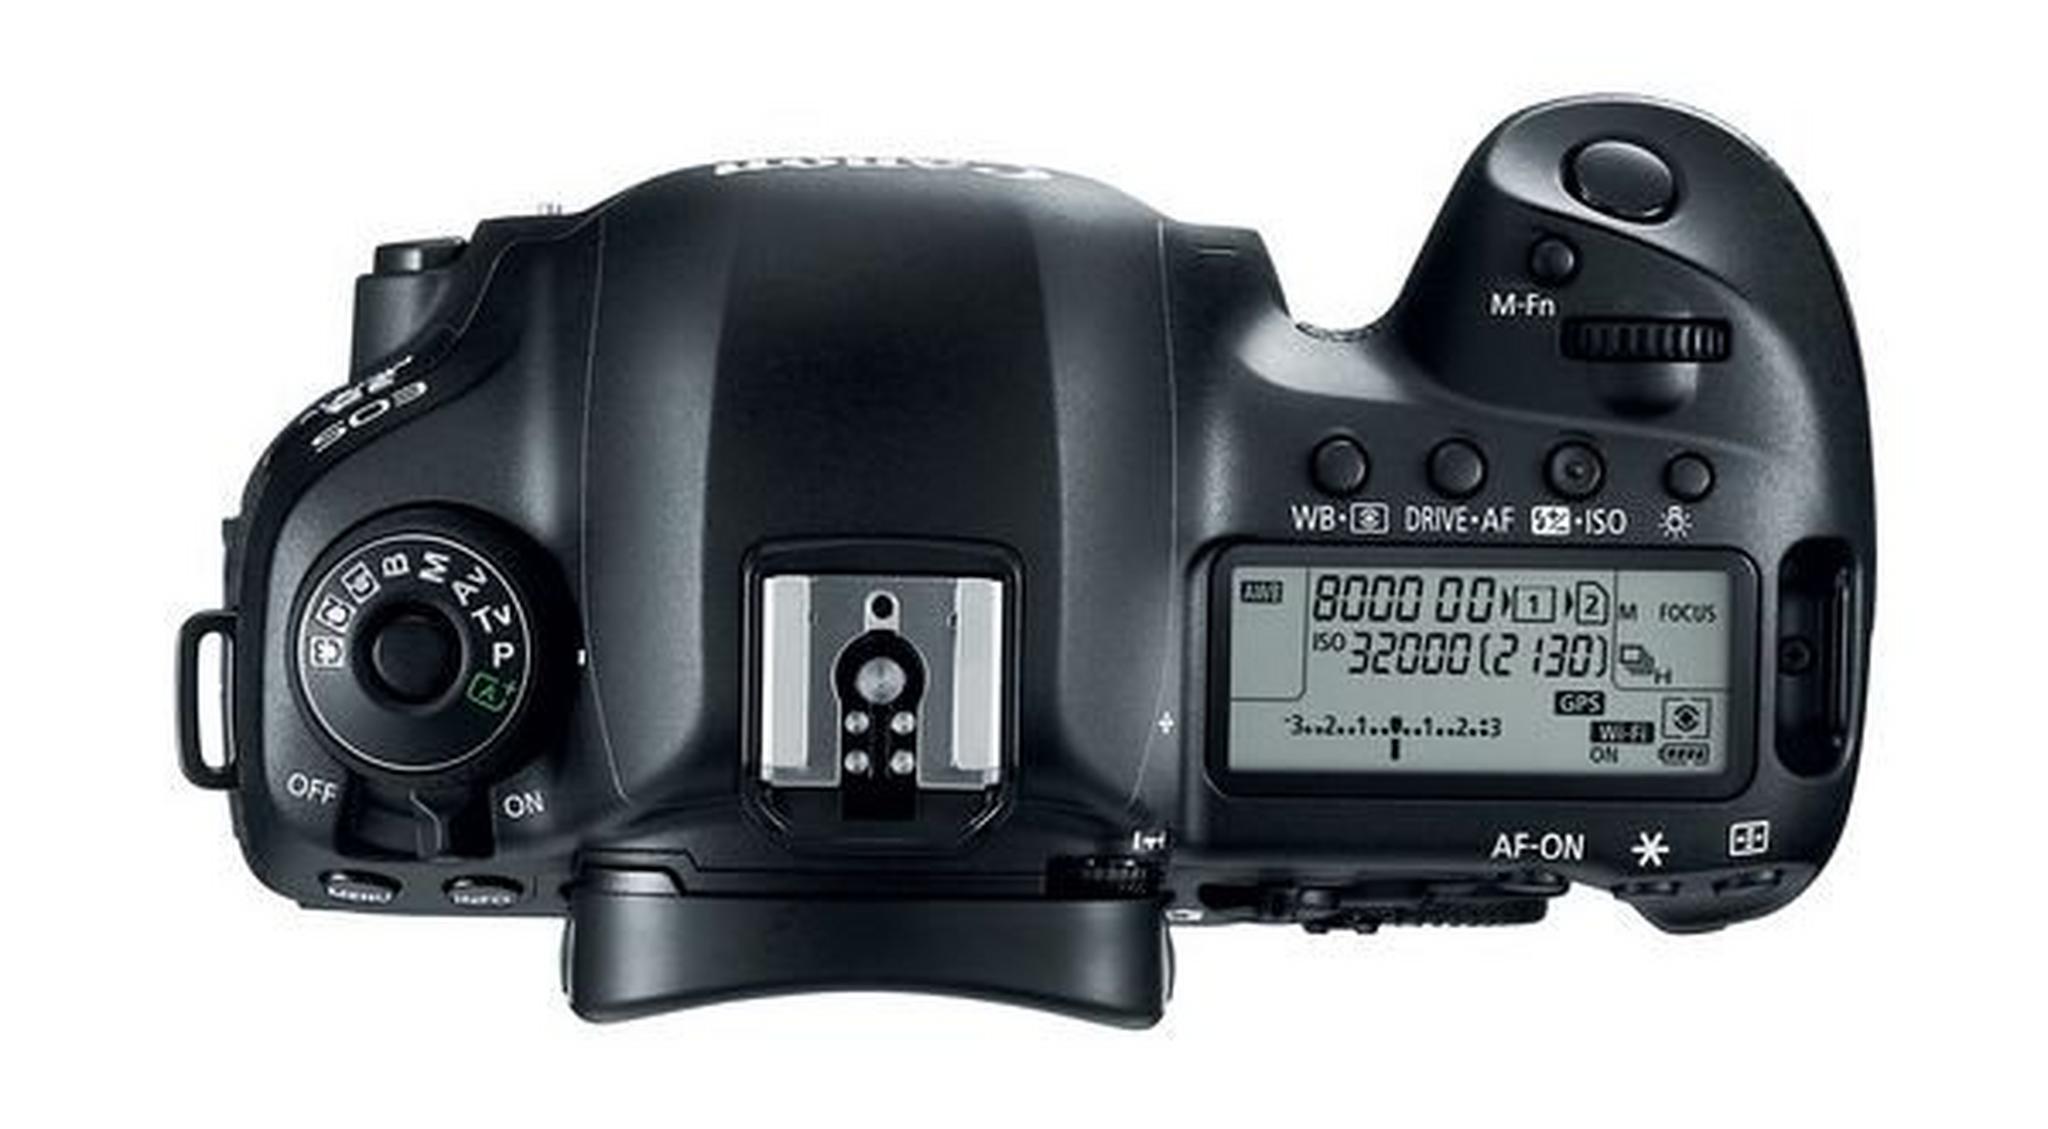 Canon EOS 5D Mark IV 30.4MP 4K WiFi DSLR Camera